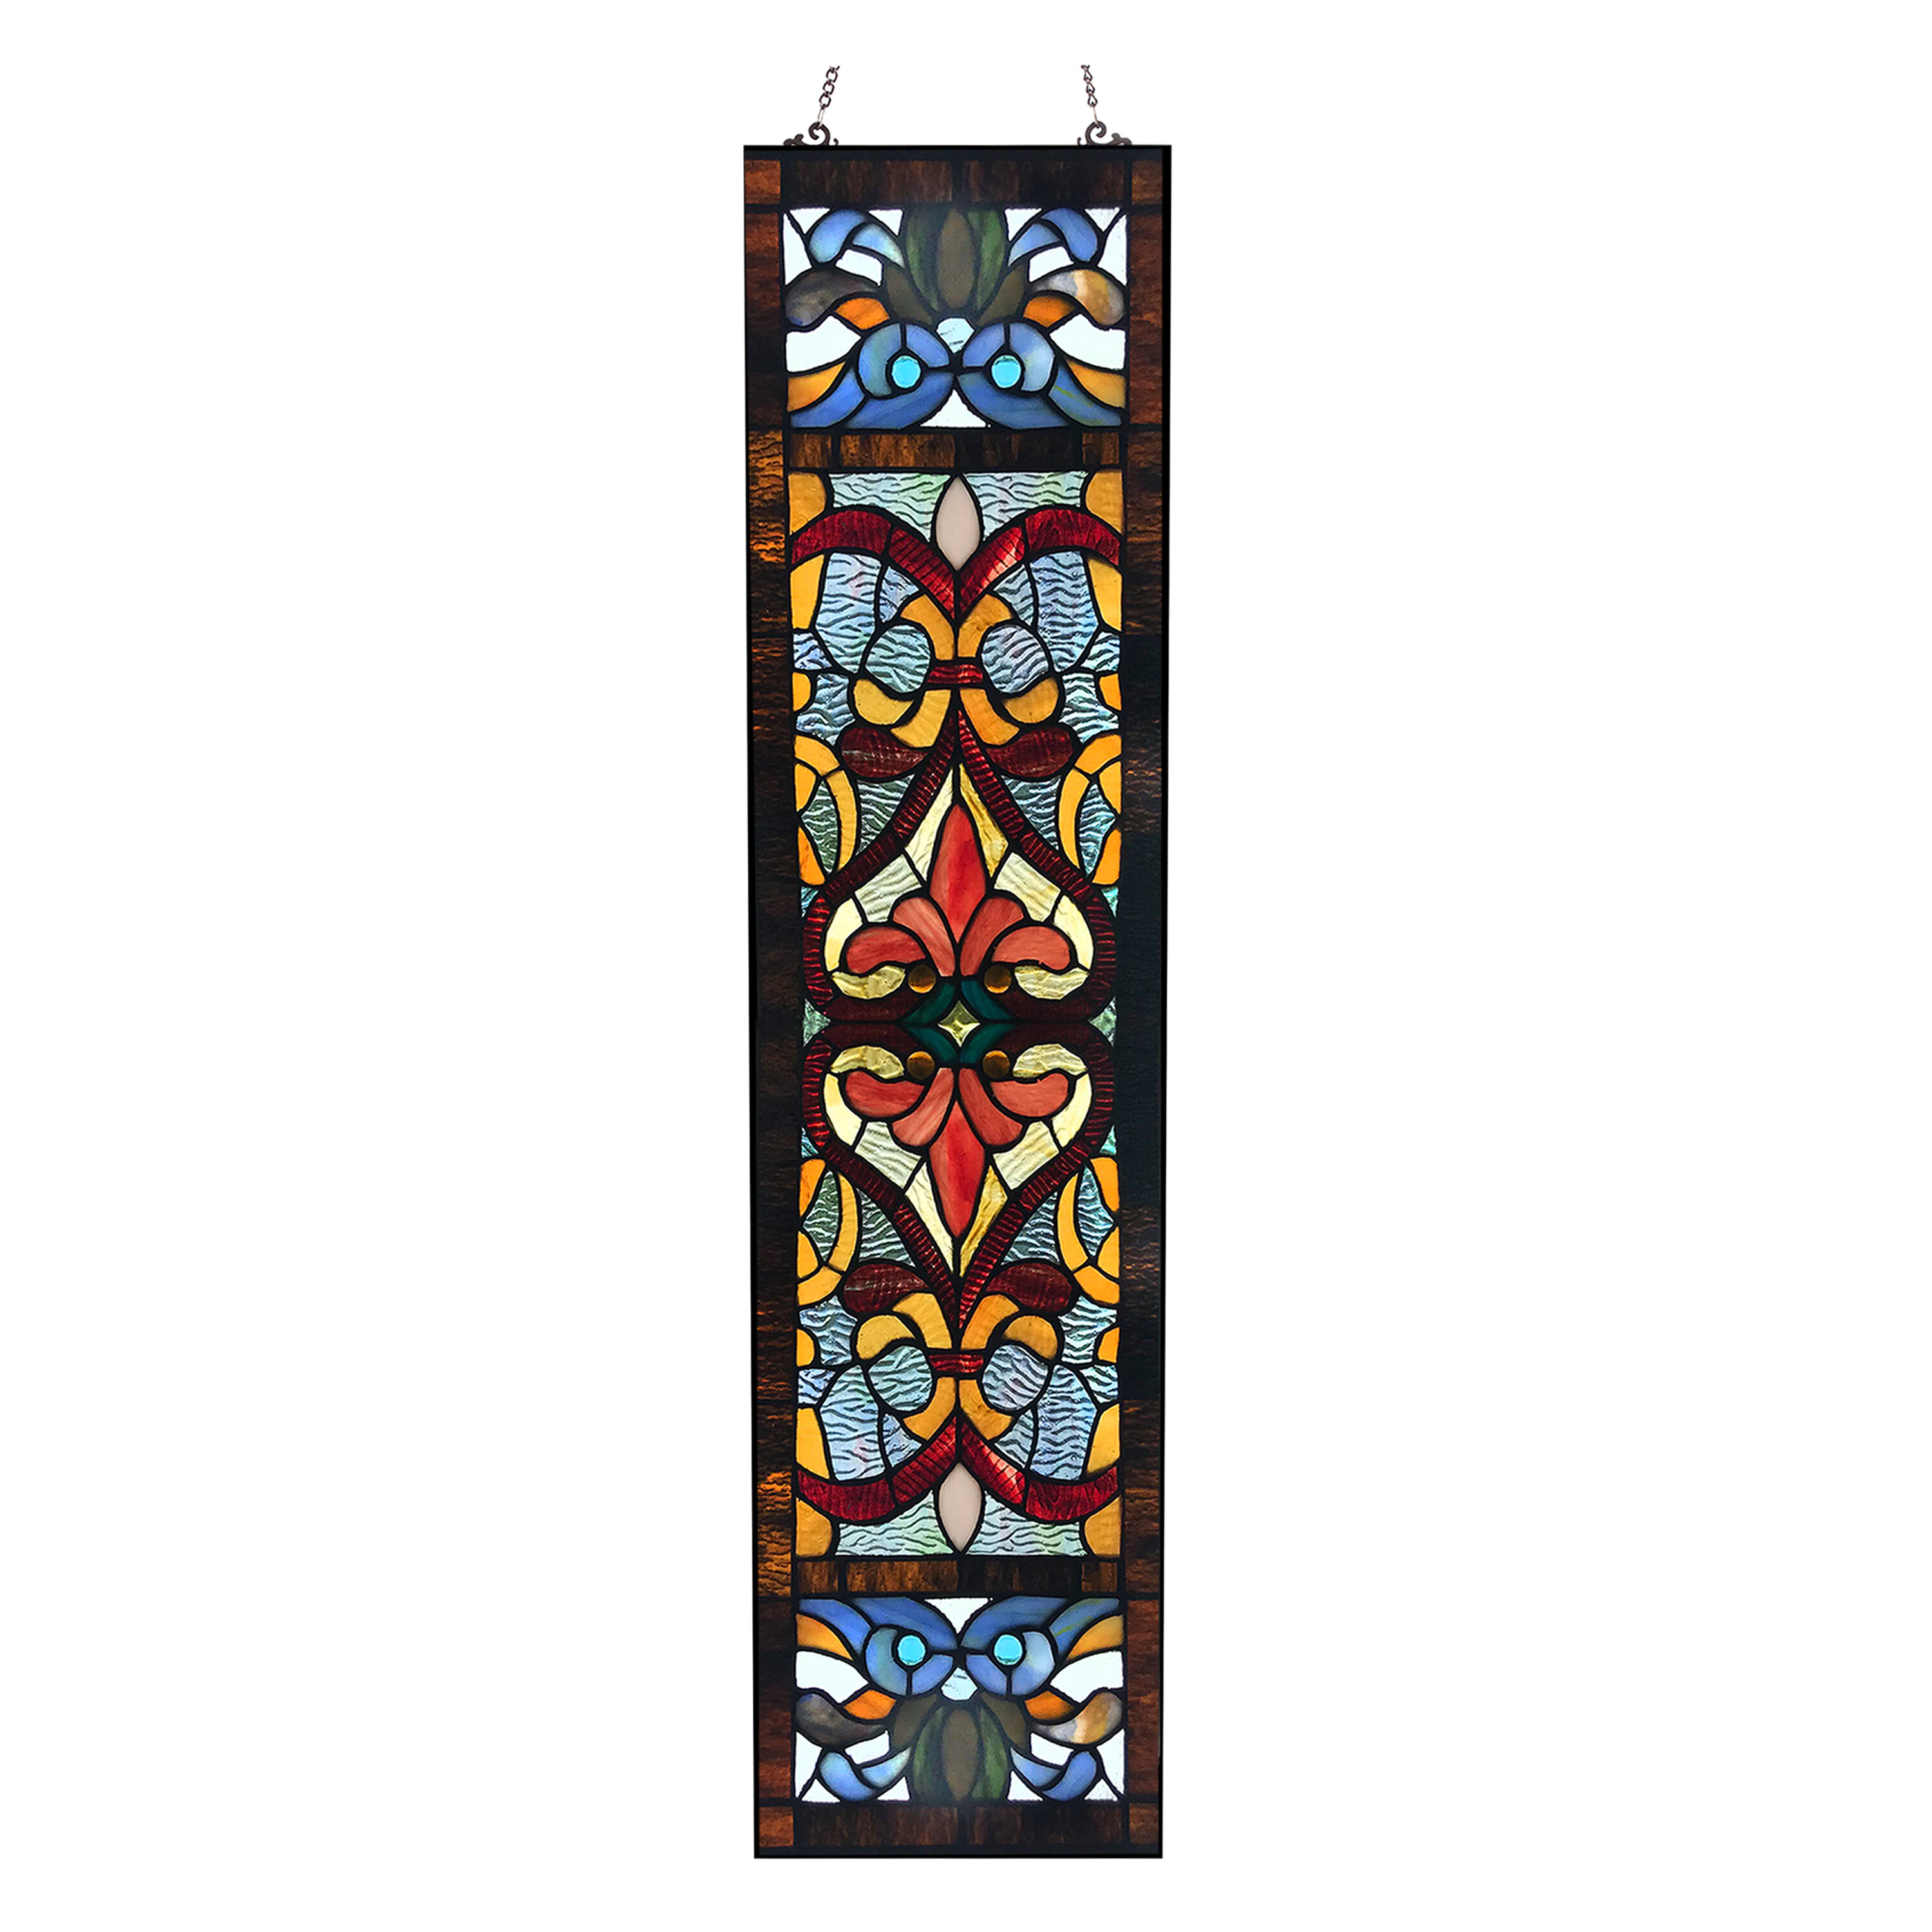 Astoria Grand Stained Glass Window Panel Reviews Wayfair